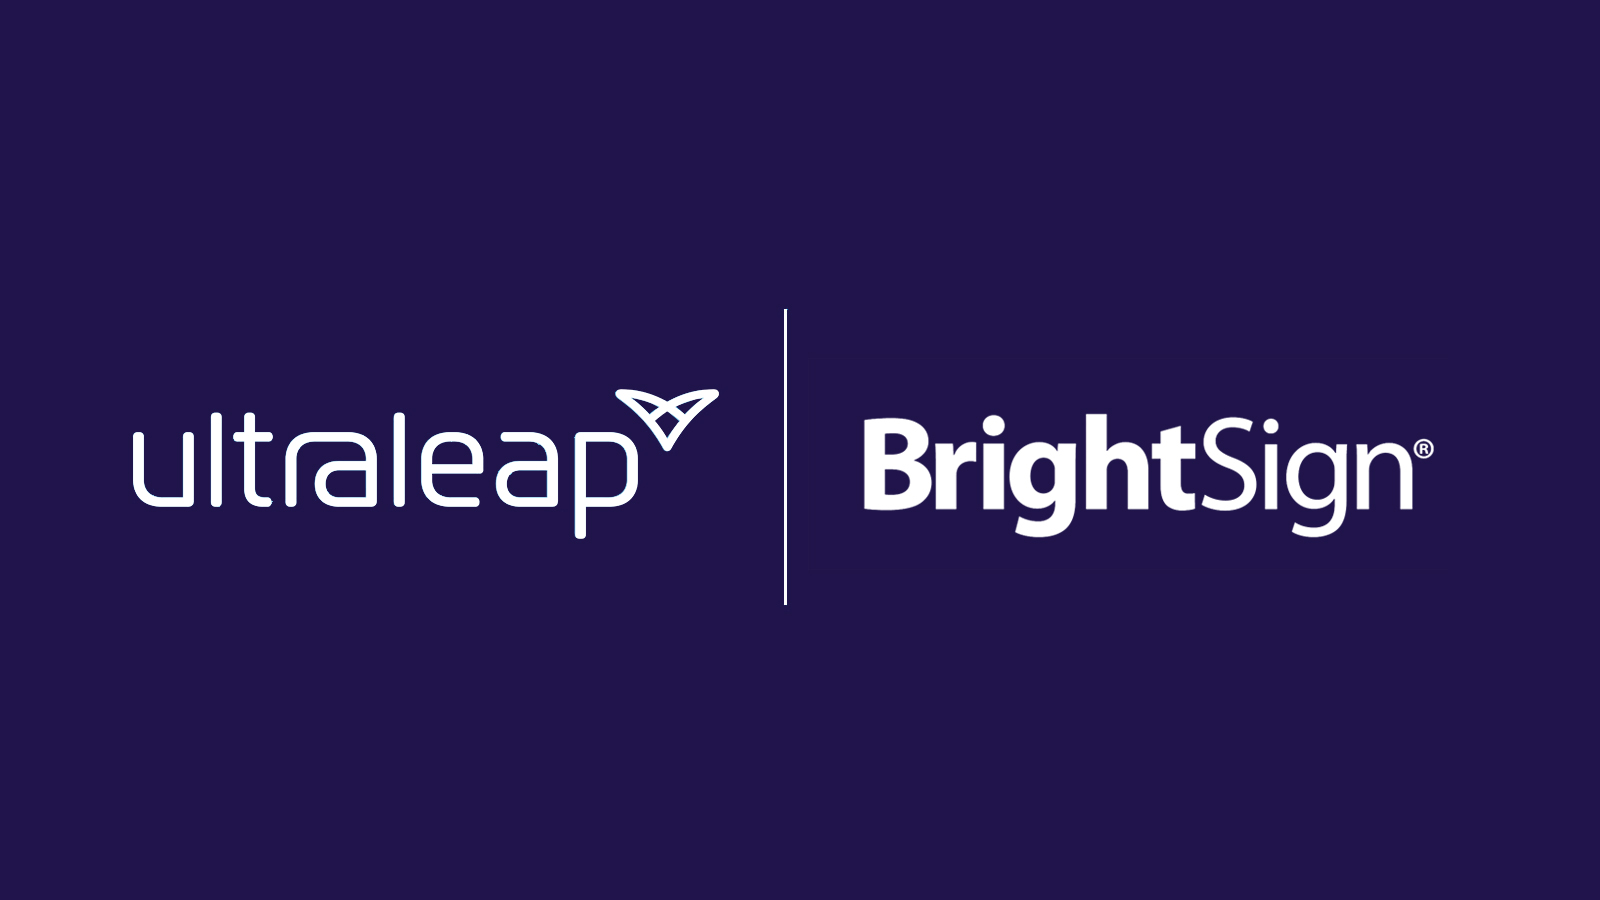 BrightSign and Ultraleap logos